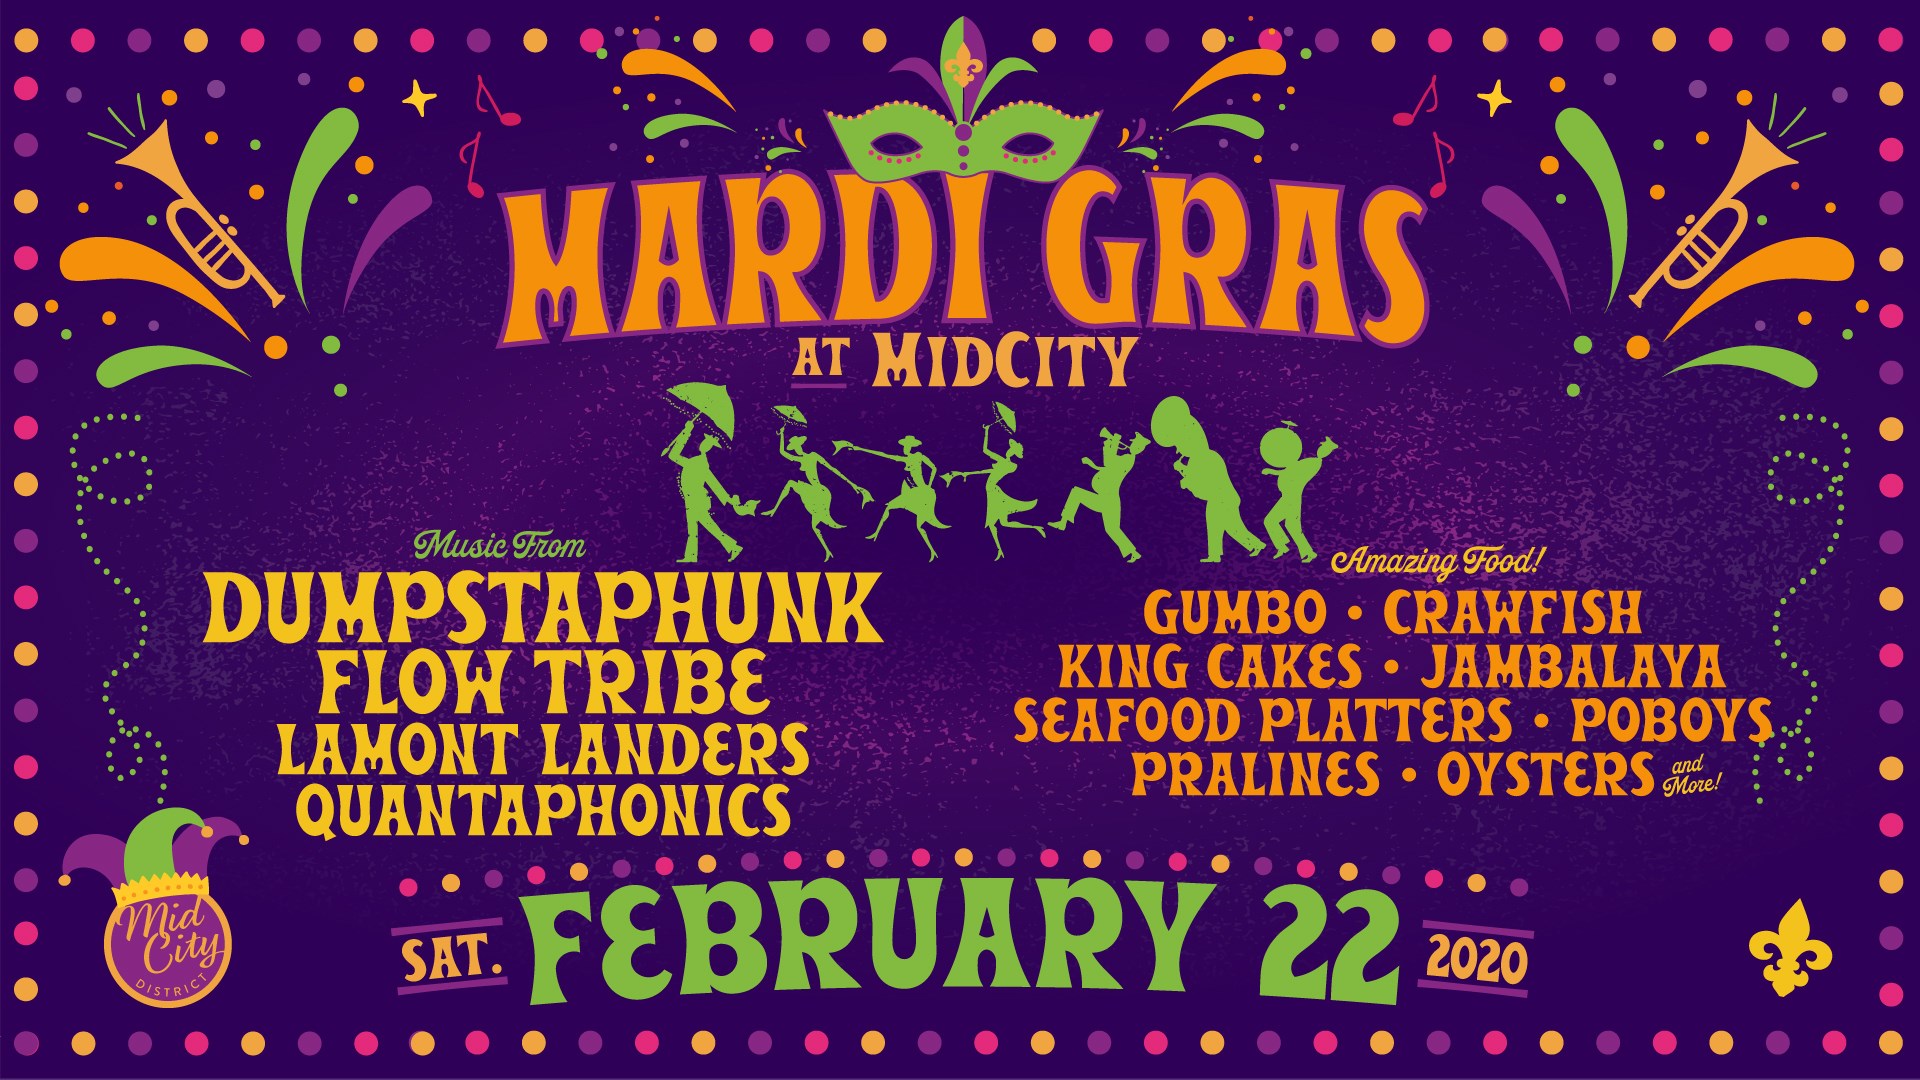 Mardi Gras at MidCity Huntsville Alabama 2020